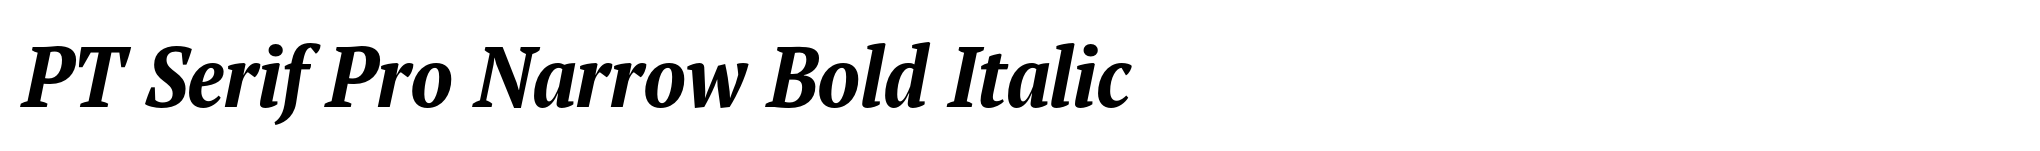 PT Serif Pro Narrow Bold Italic image